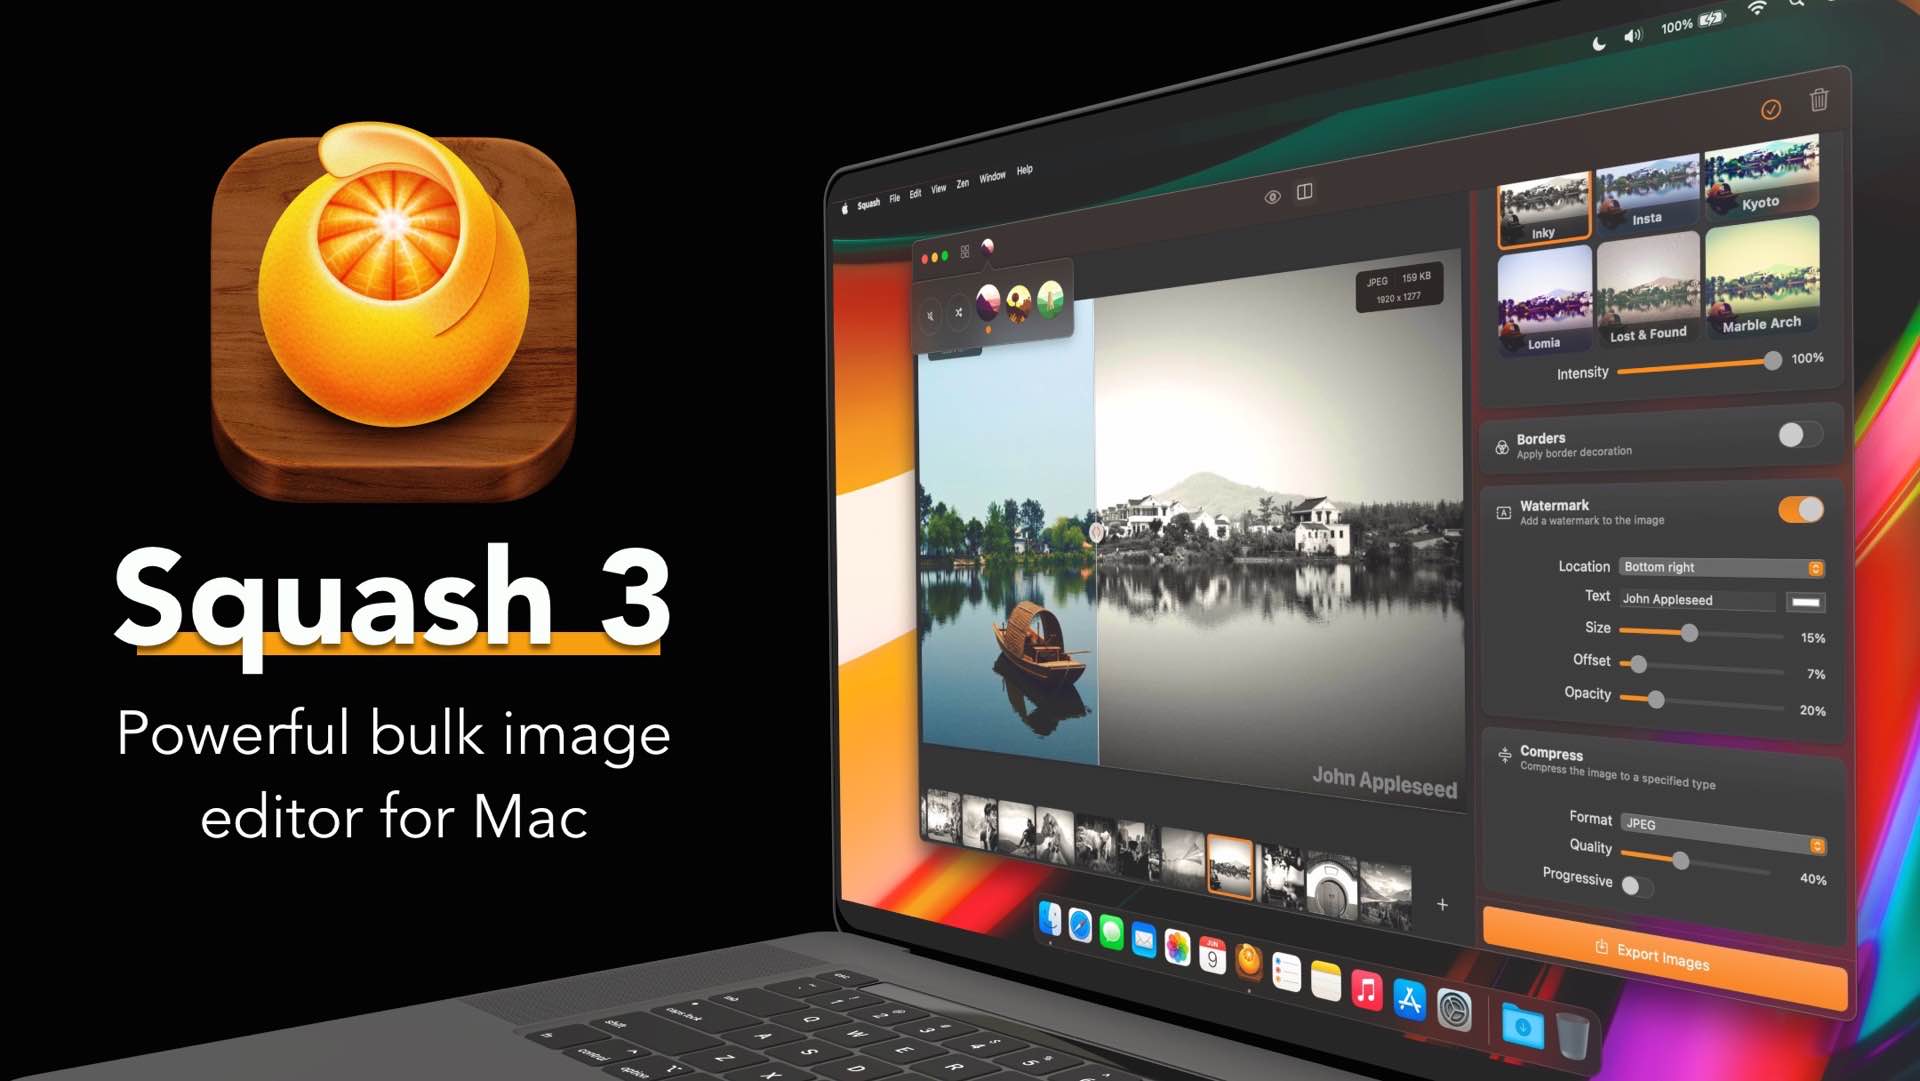 squash-3-image-editor-macos-realmac-software